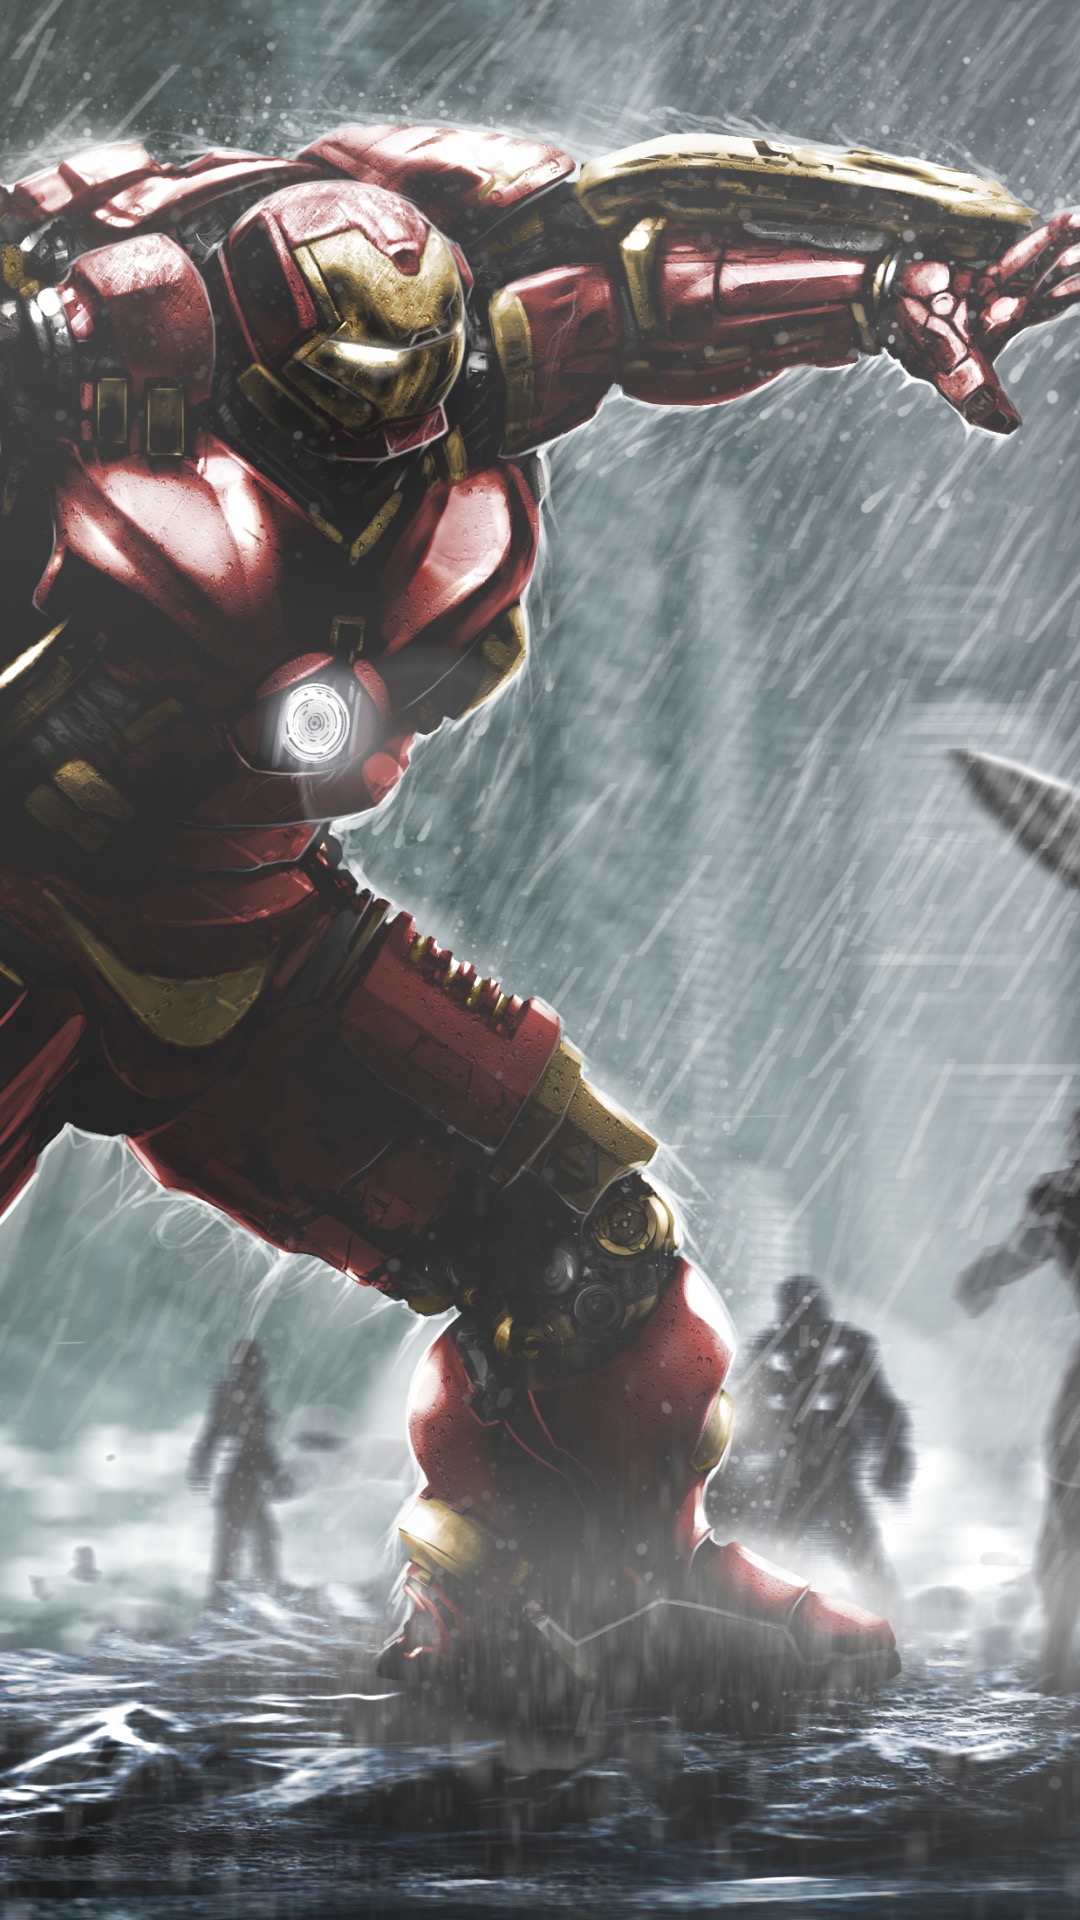 Fondos de pantalla de cine para el móvil | Iron man wallpaper, Iron man  hulkbuster, Hulkbuster